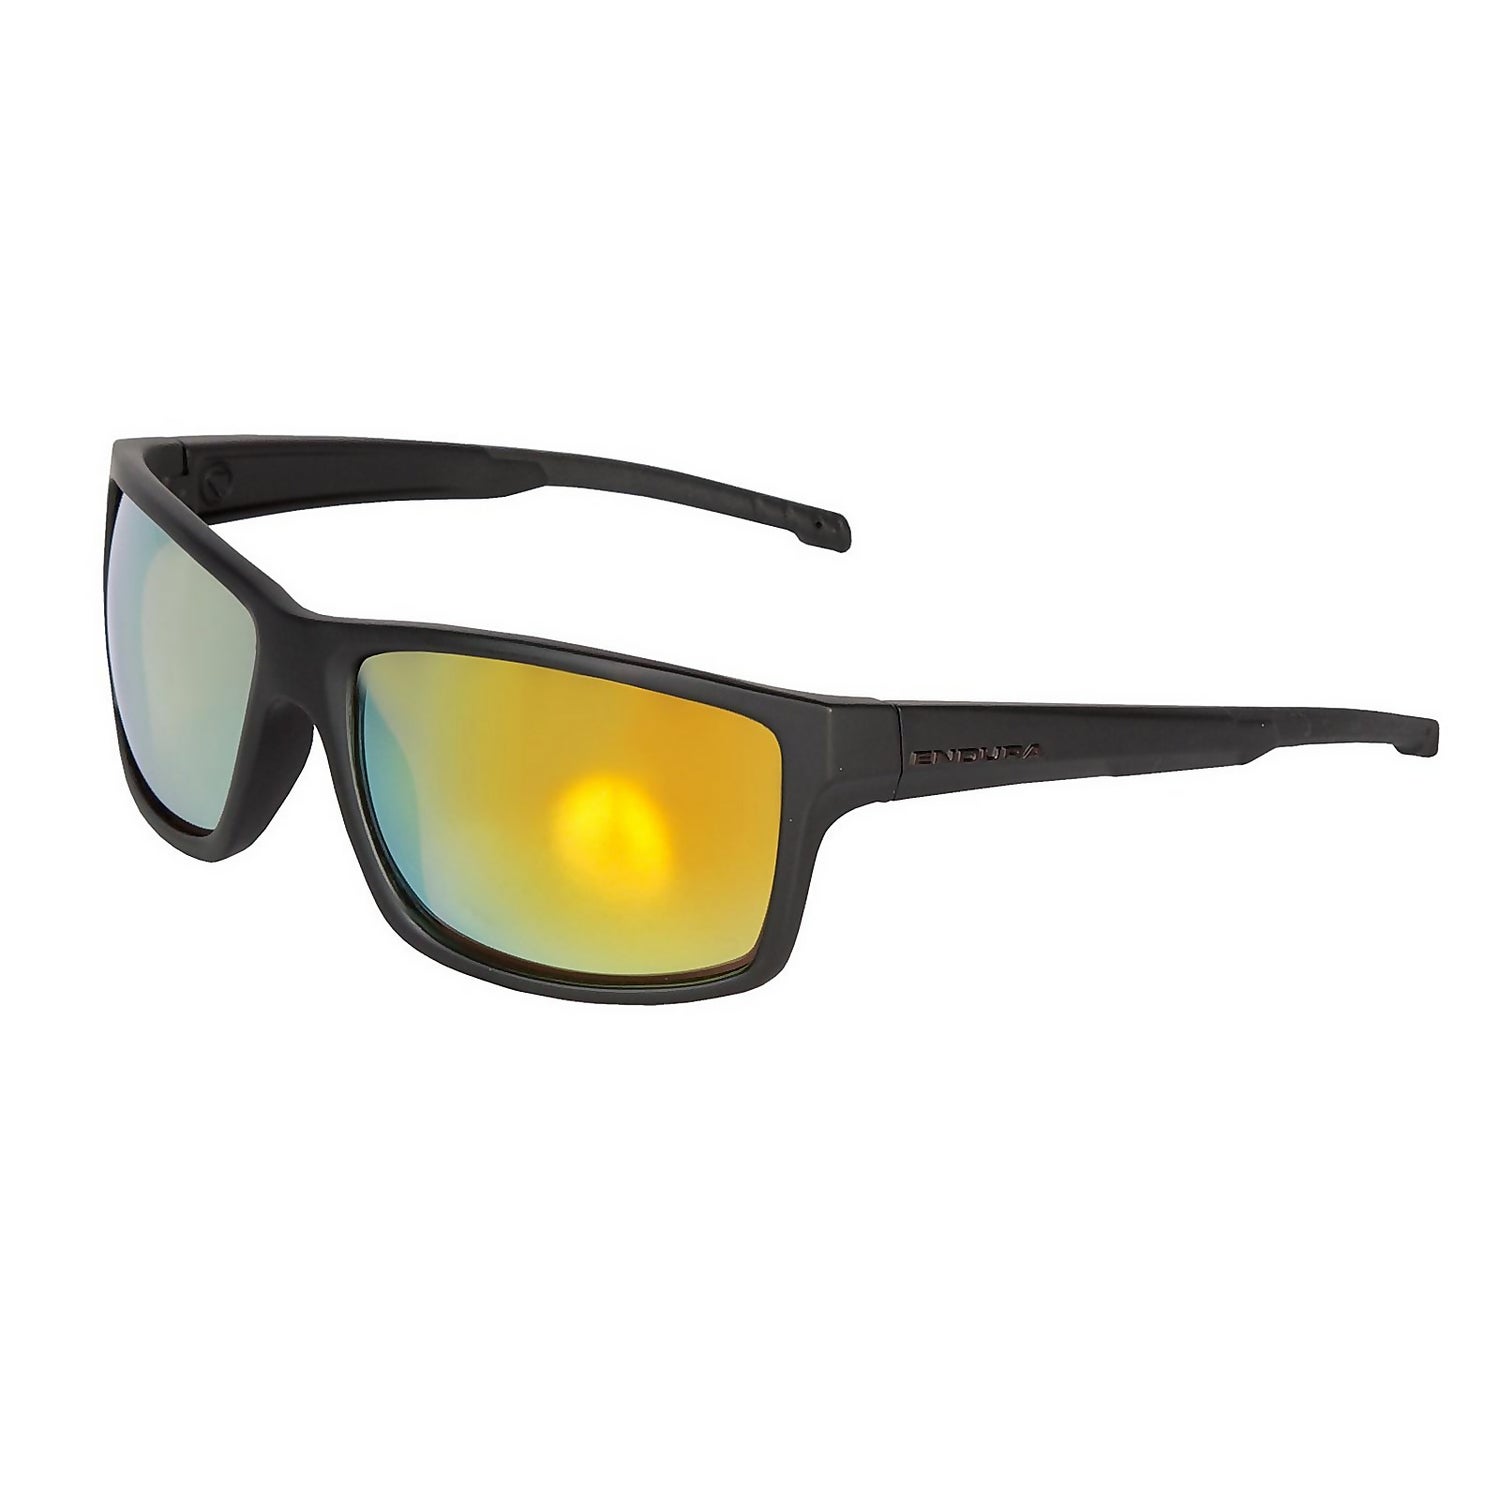 Hummvee Glasses - Hi-Viz Yellow - One Size